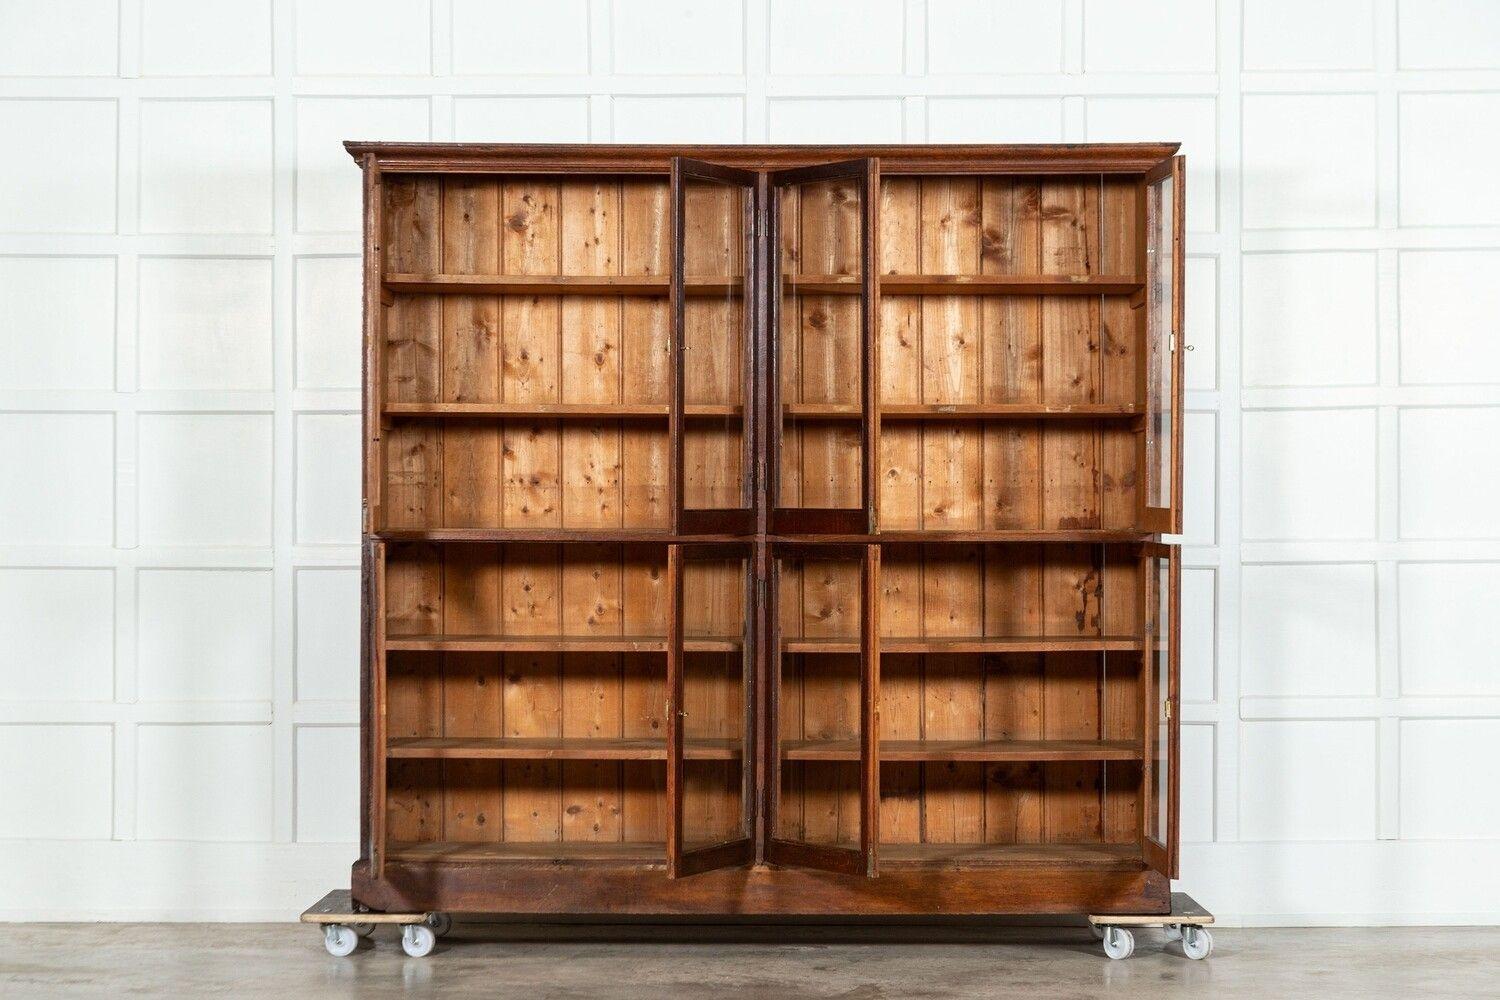 circa 1900
Large English Oak Glazed Bookcase
sku 1755
W199 x D51 x H184 cm
Weight 86 Kg